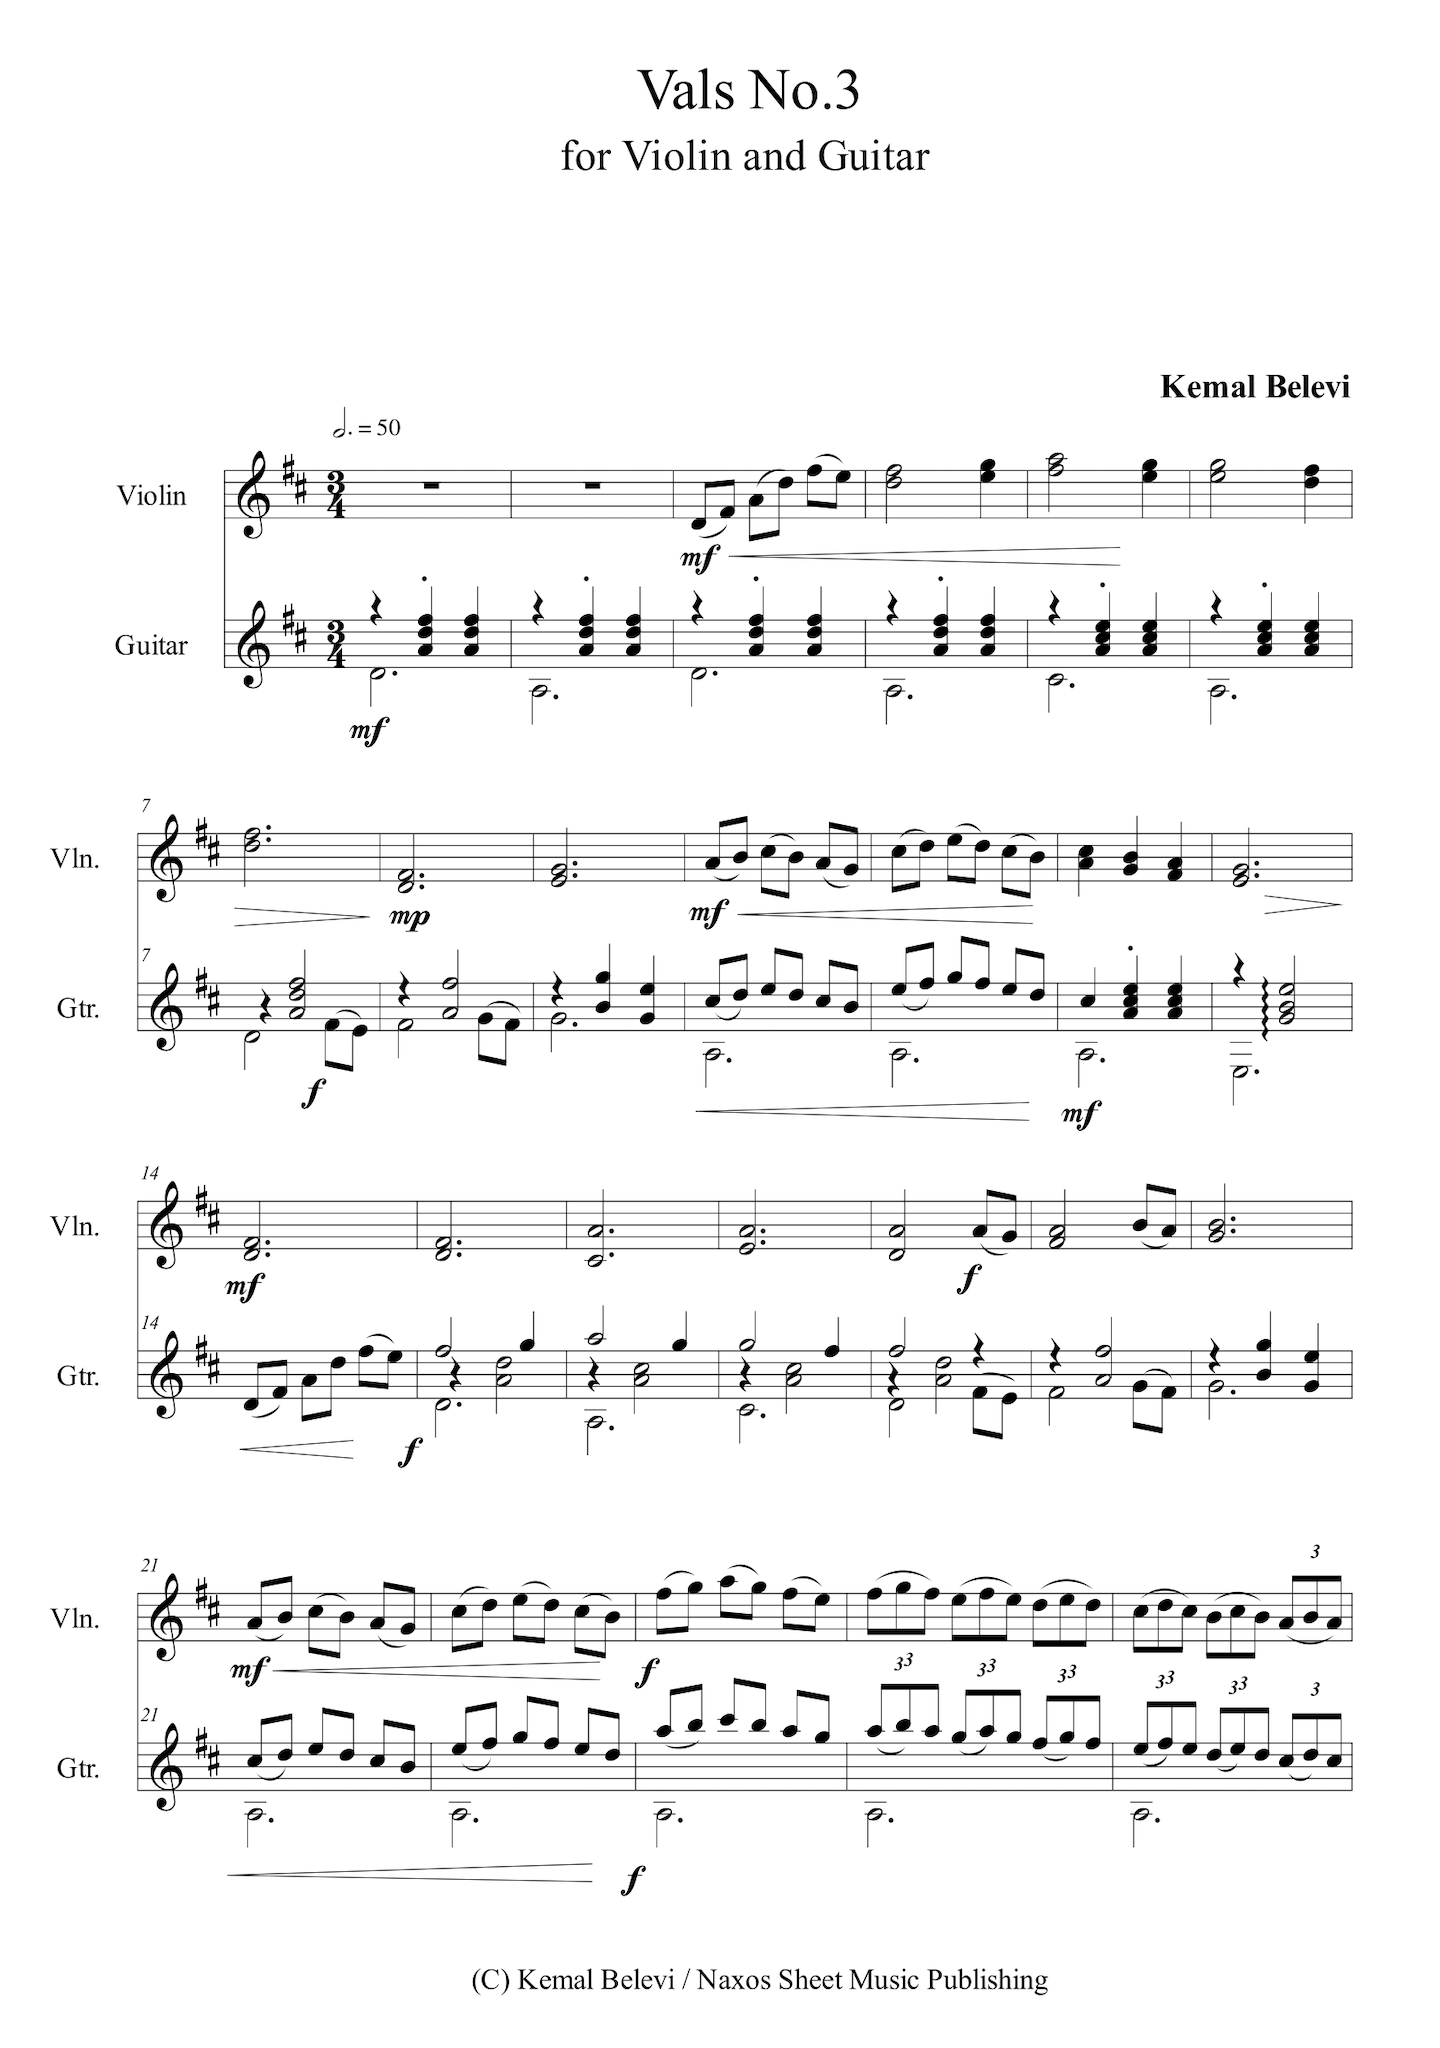 Kemal Belevi: Vals No.3 – for Violin and Guitar